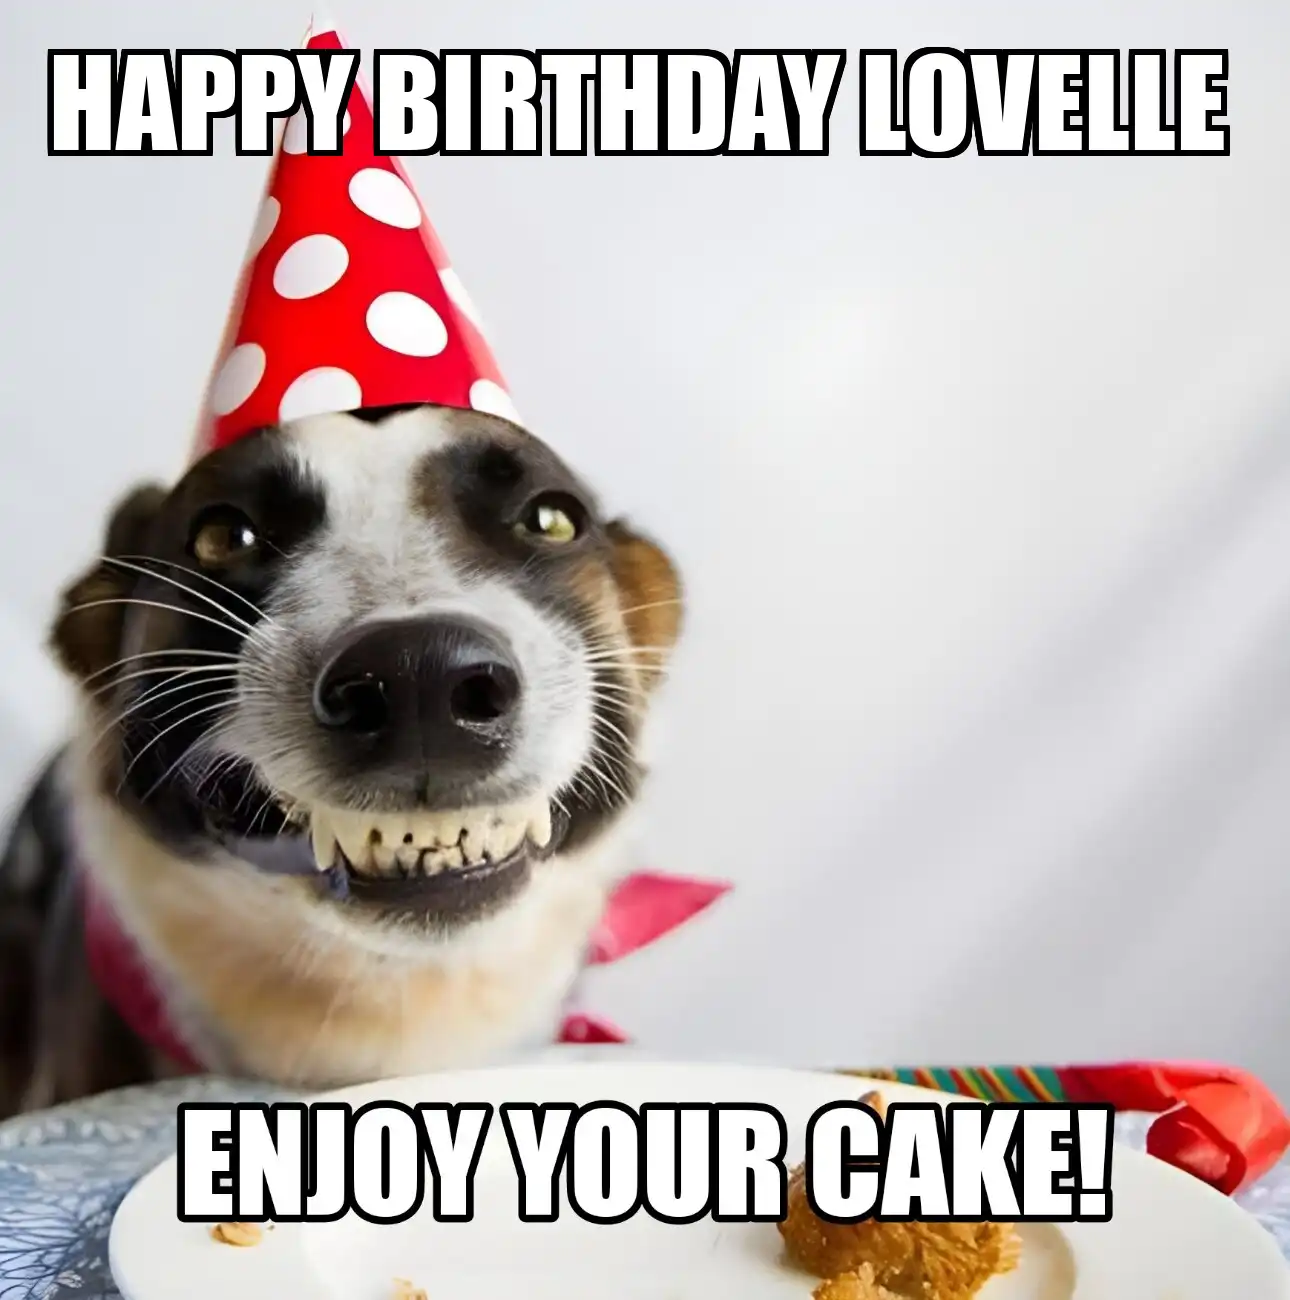 Happy Birthday Lovelle Enjoy Your Cake Dog Meme